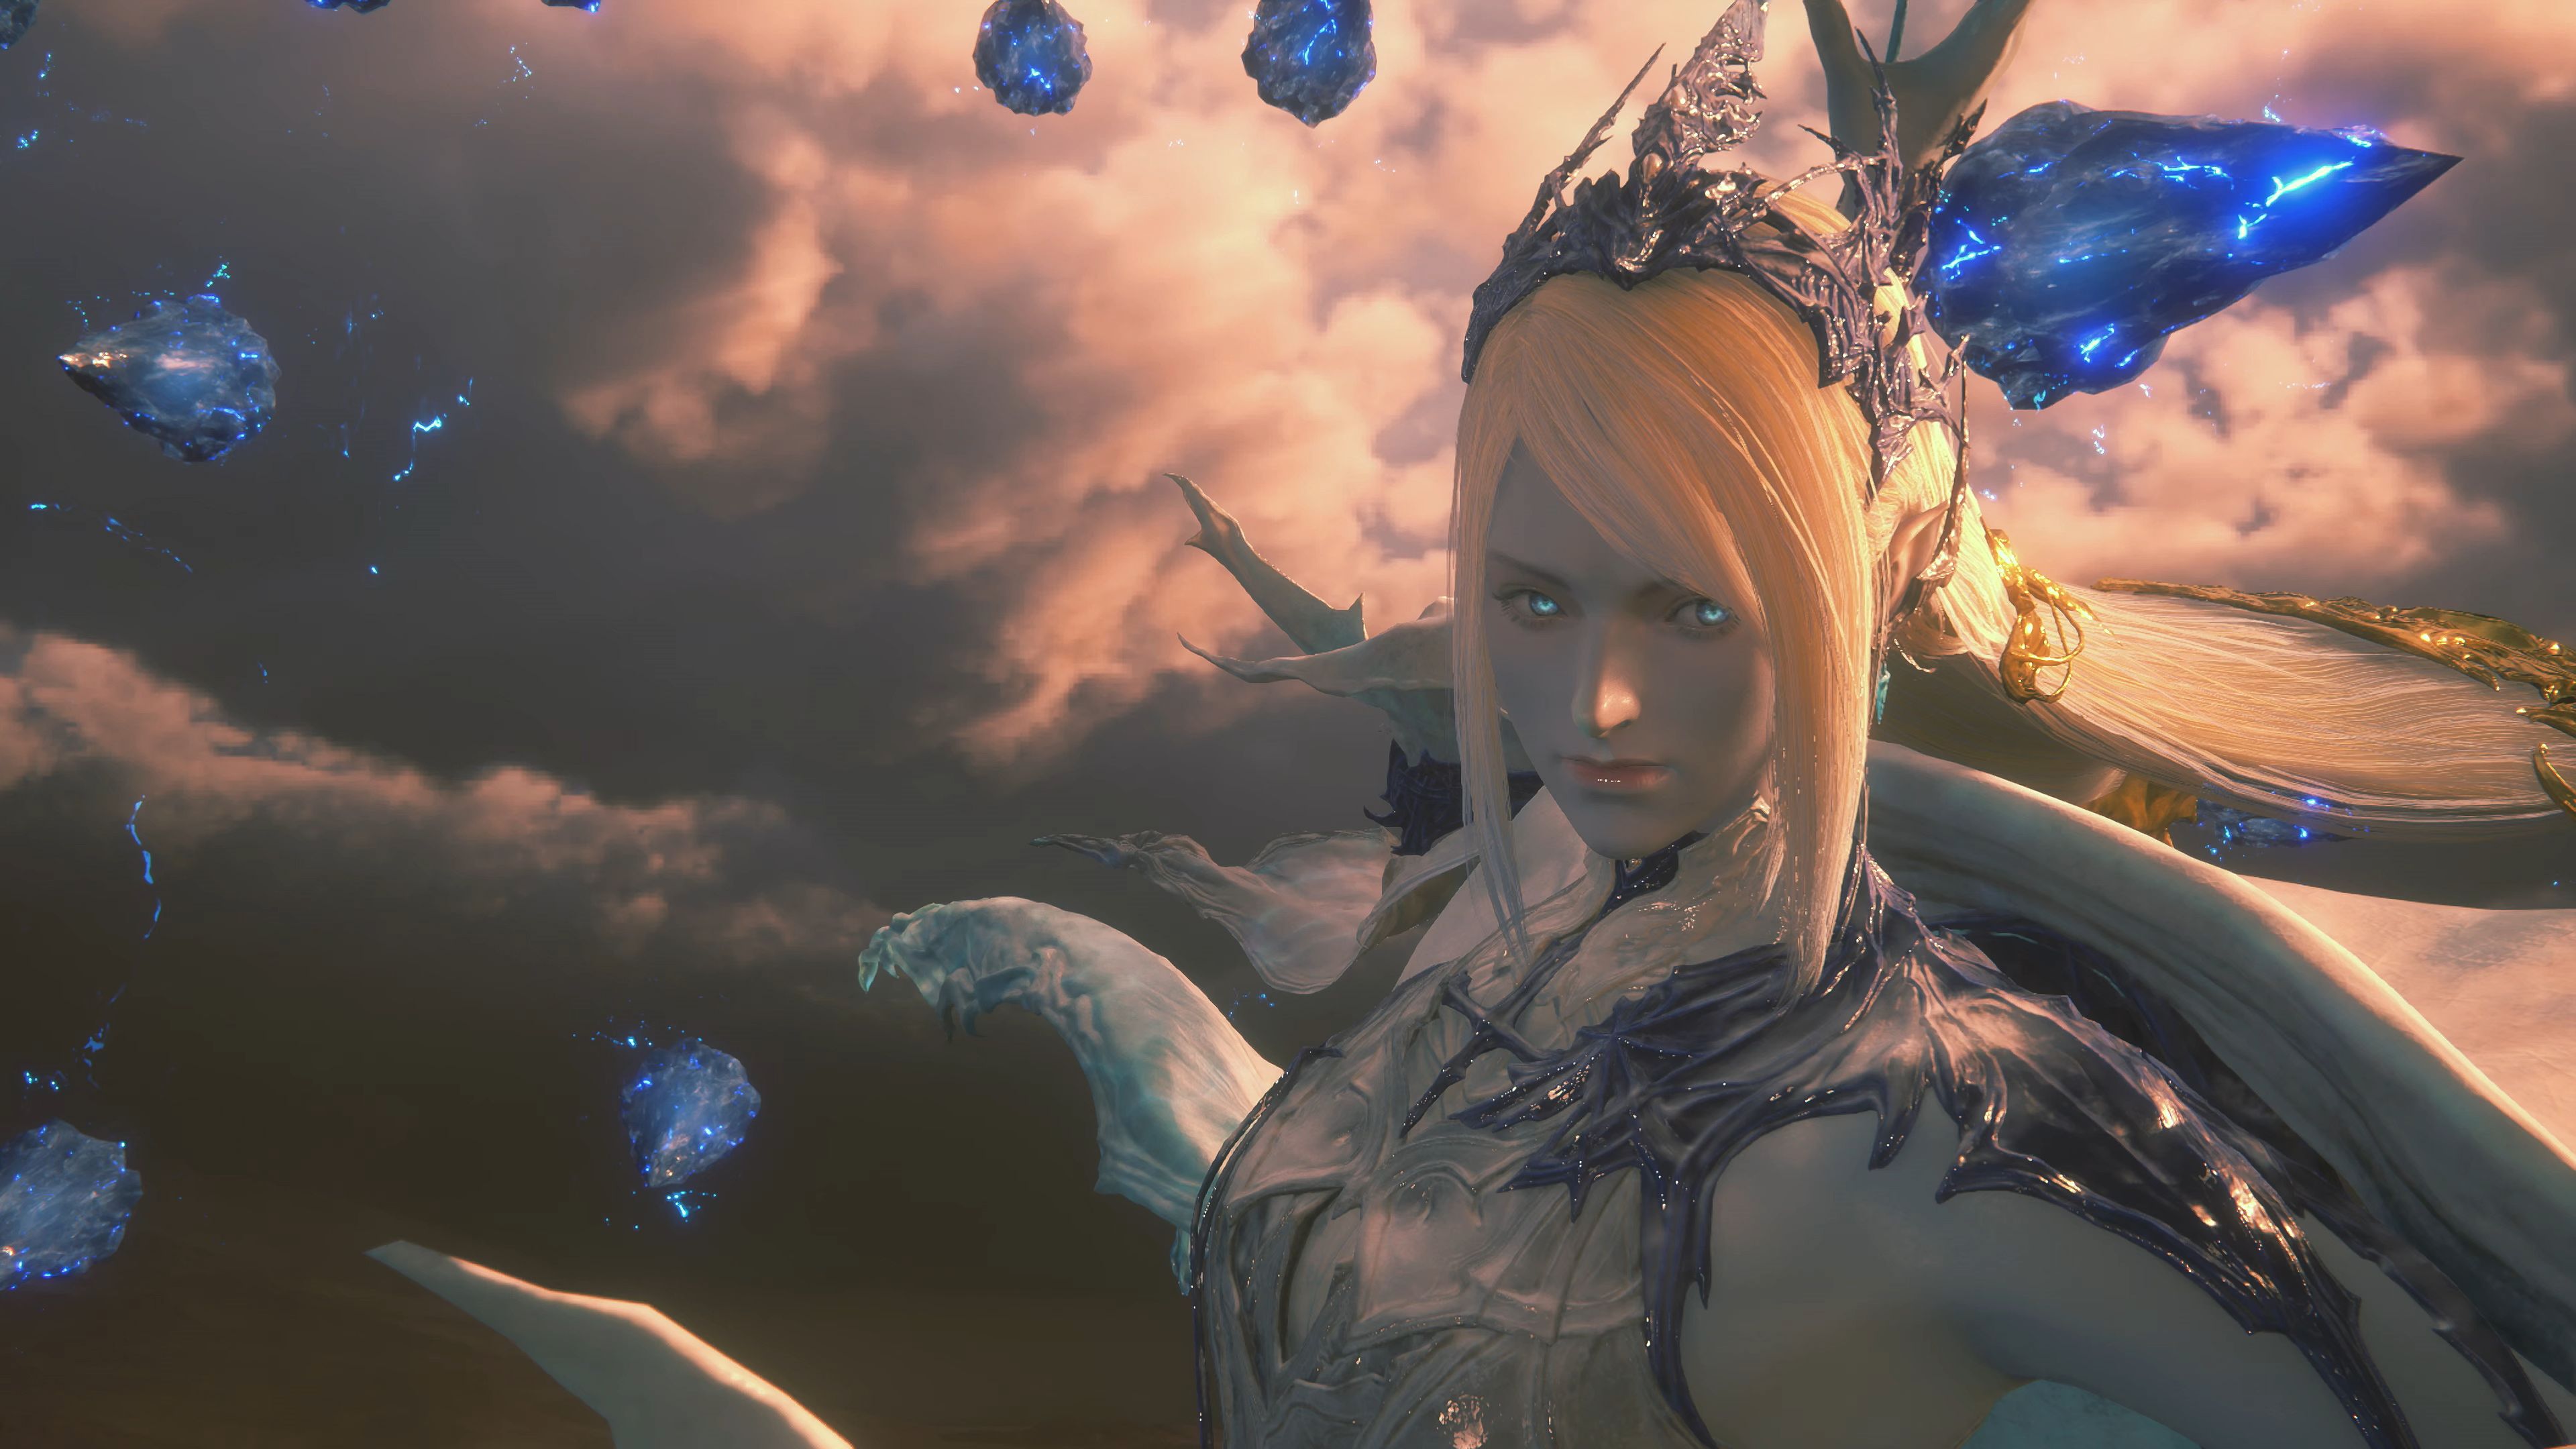 Shiva Image via Square Enix Final Fantasy XVI Screenshots Show Eikons and Locations